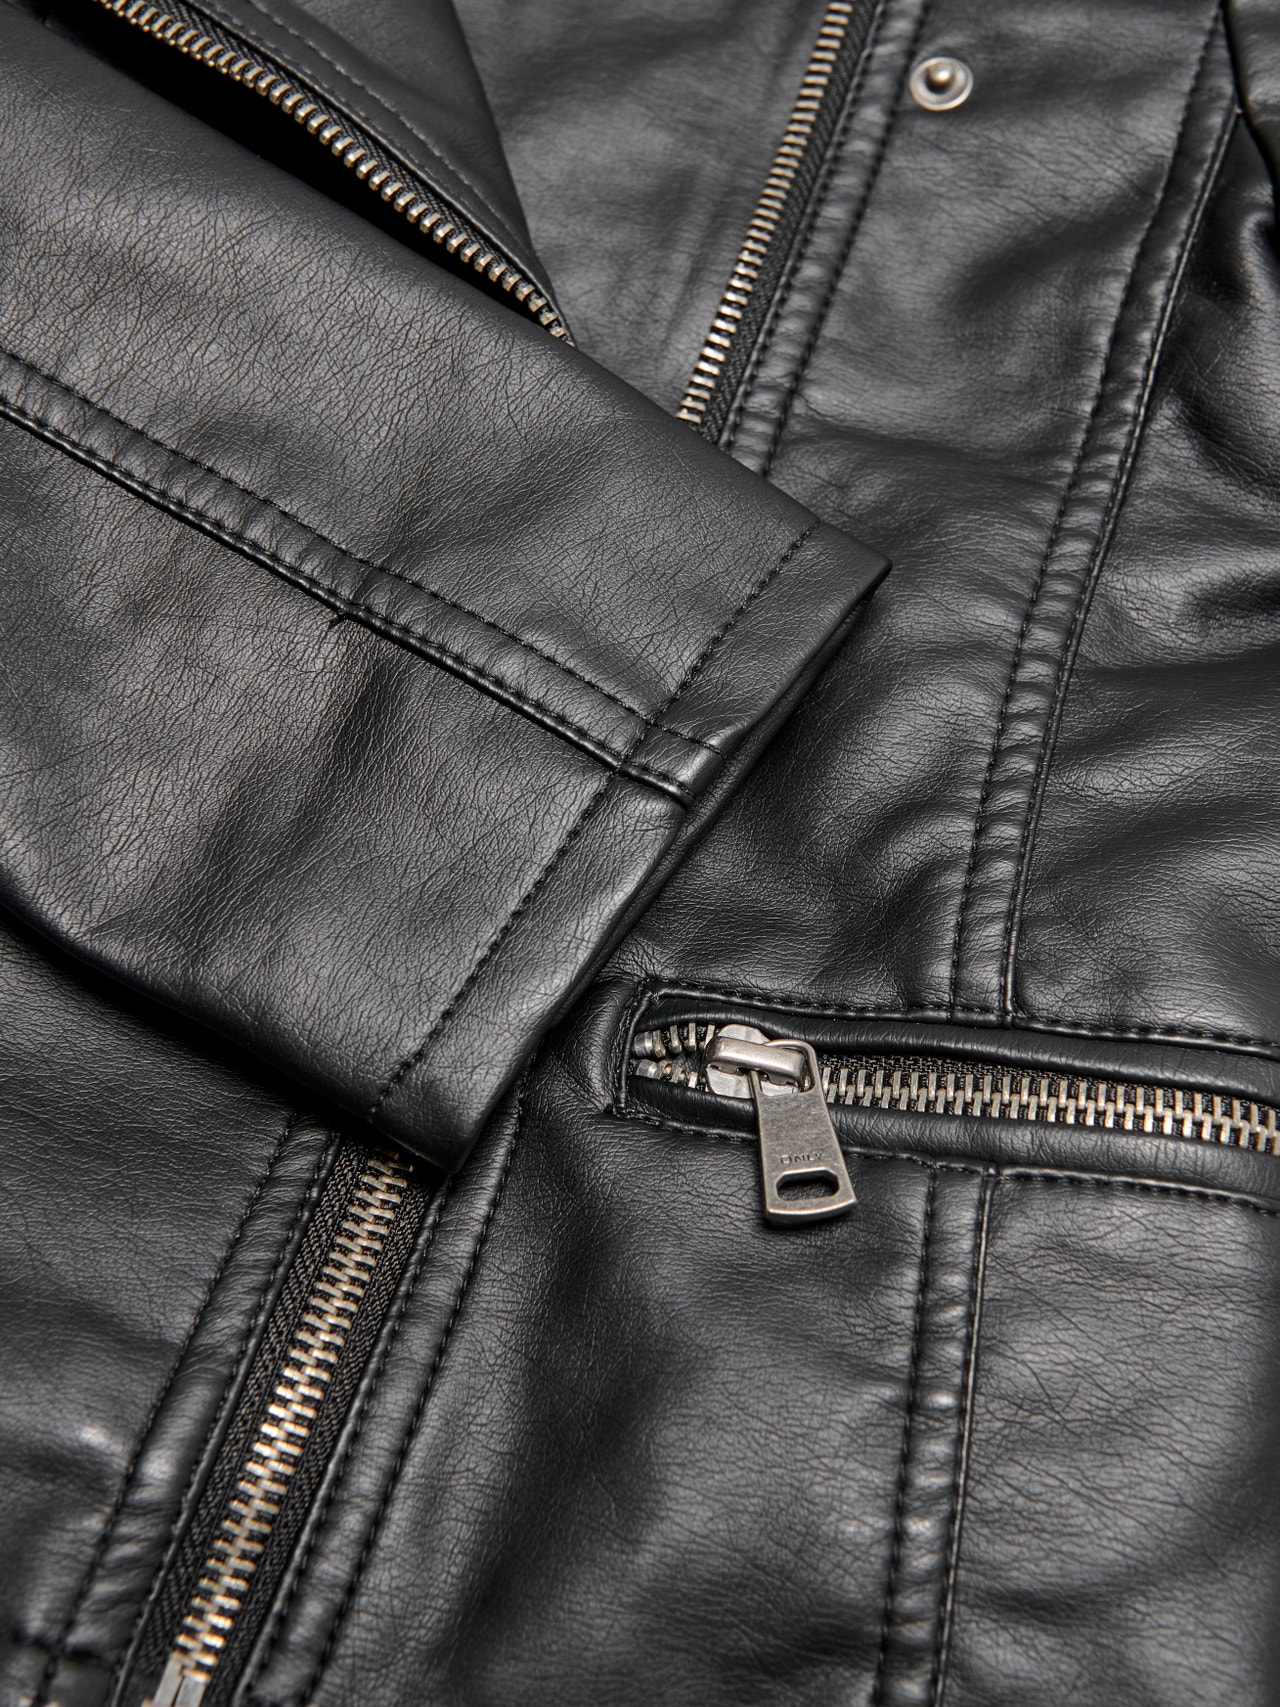 ONLY Biker Faux Leather Jacket -Black - 15198182